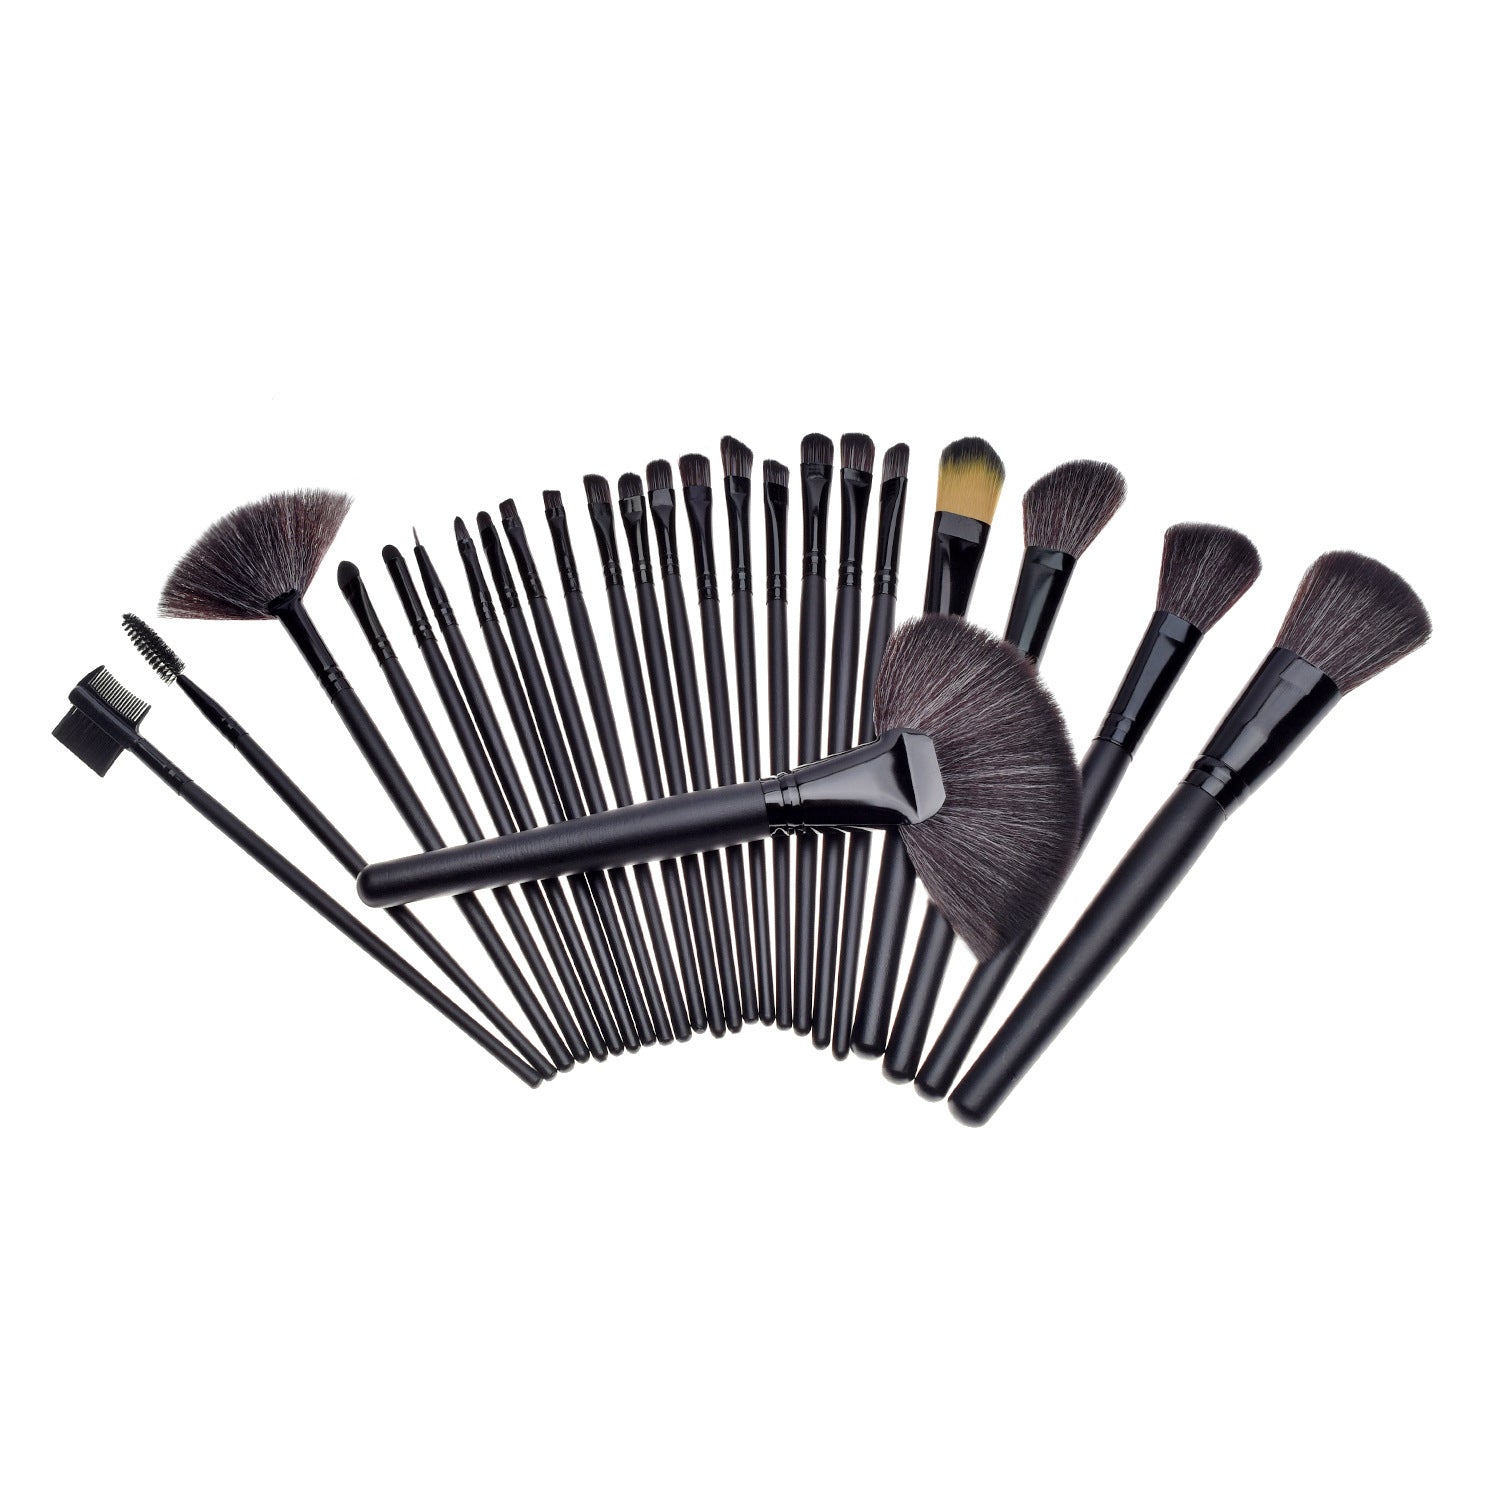 Set of 24 makeup brushes